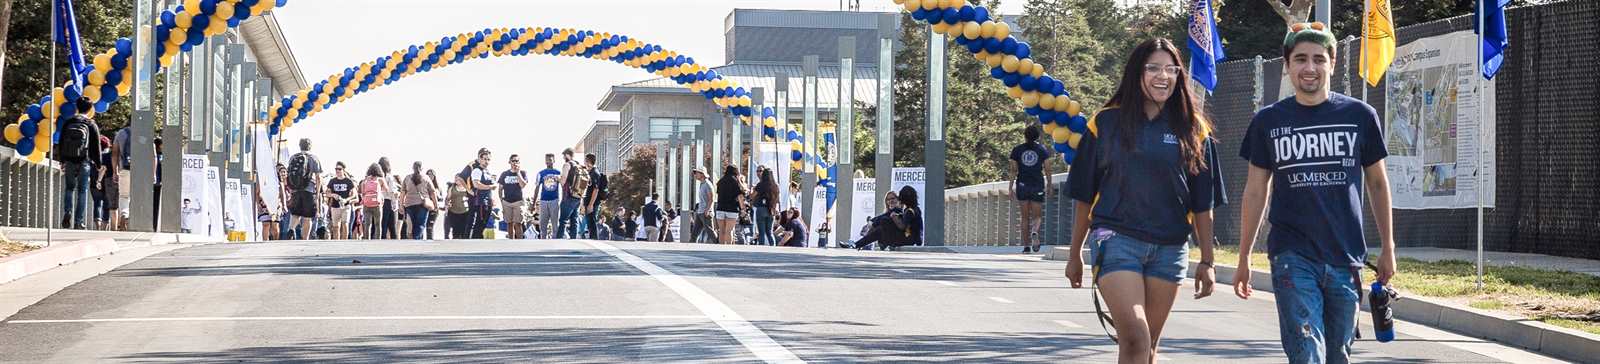 students crossing scholars bridge